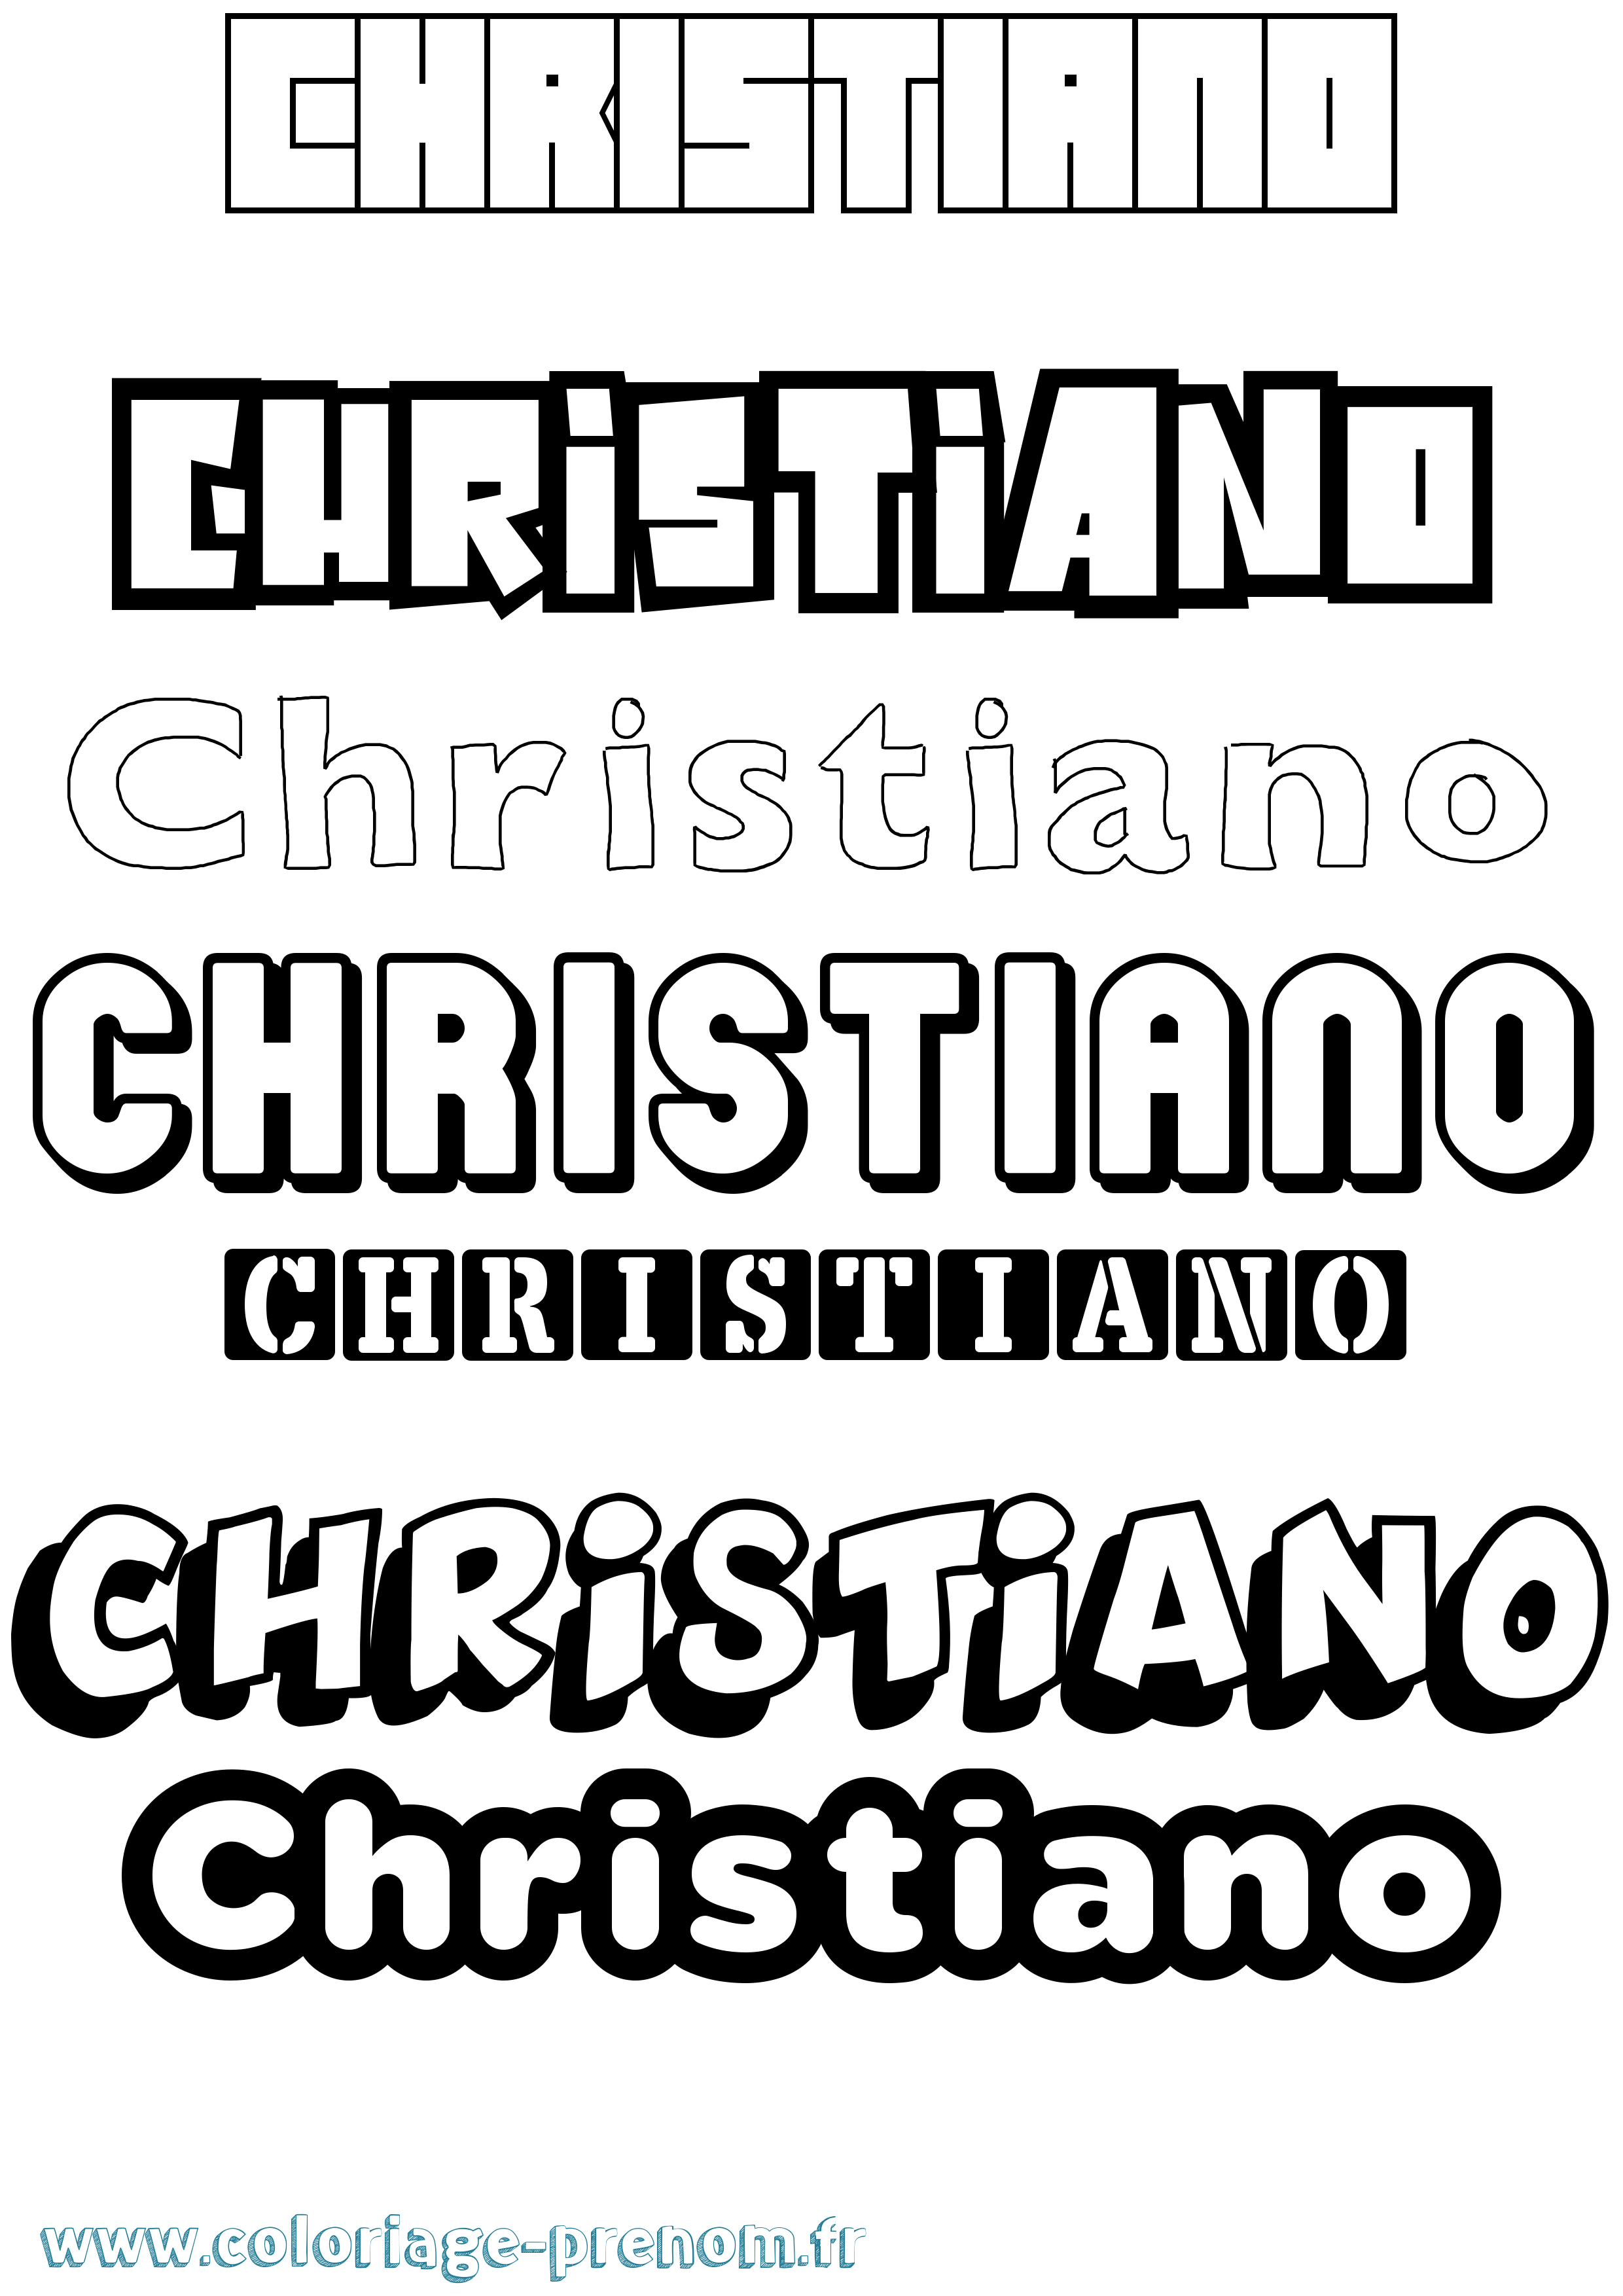 Coloriage prénom Christiano Simple